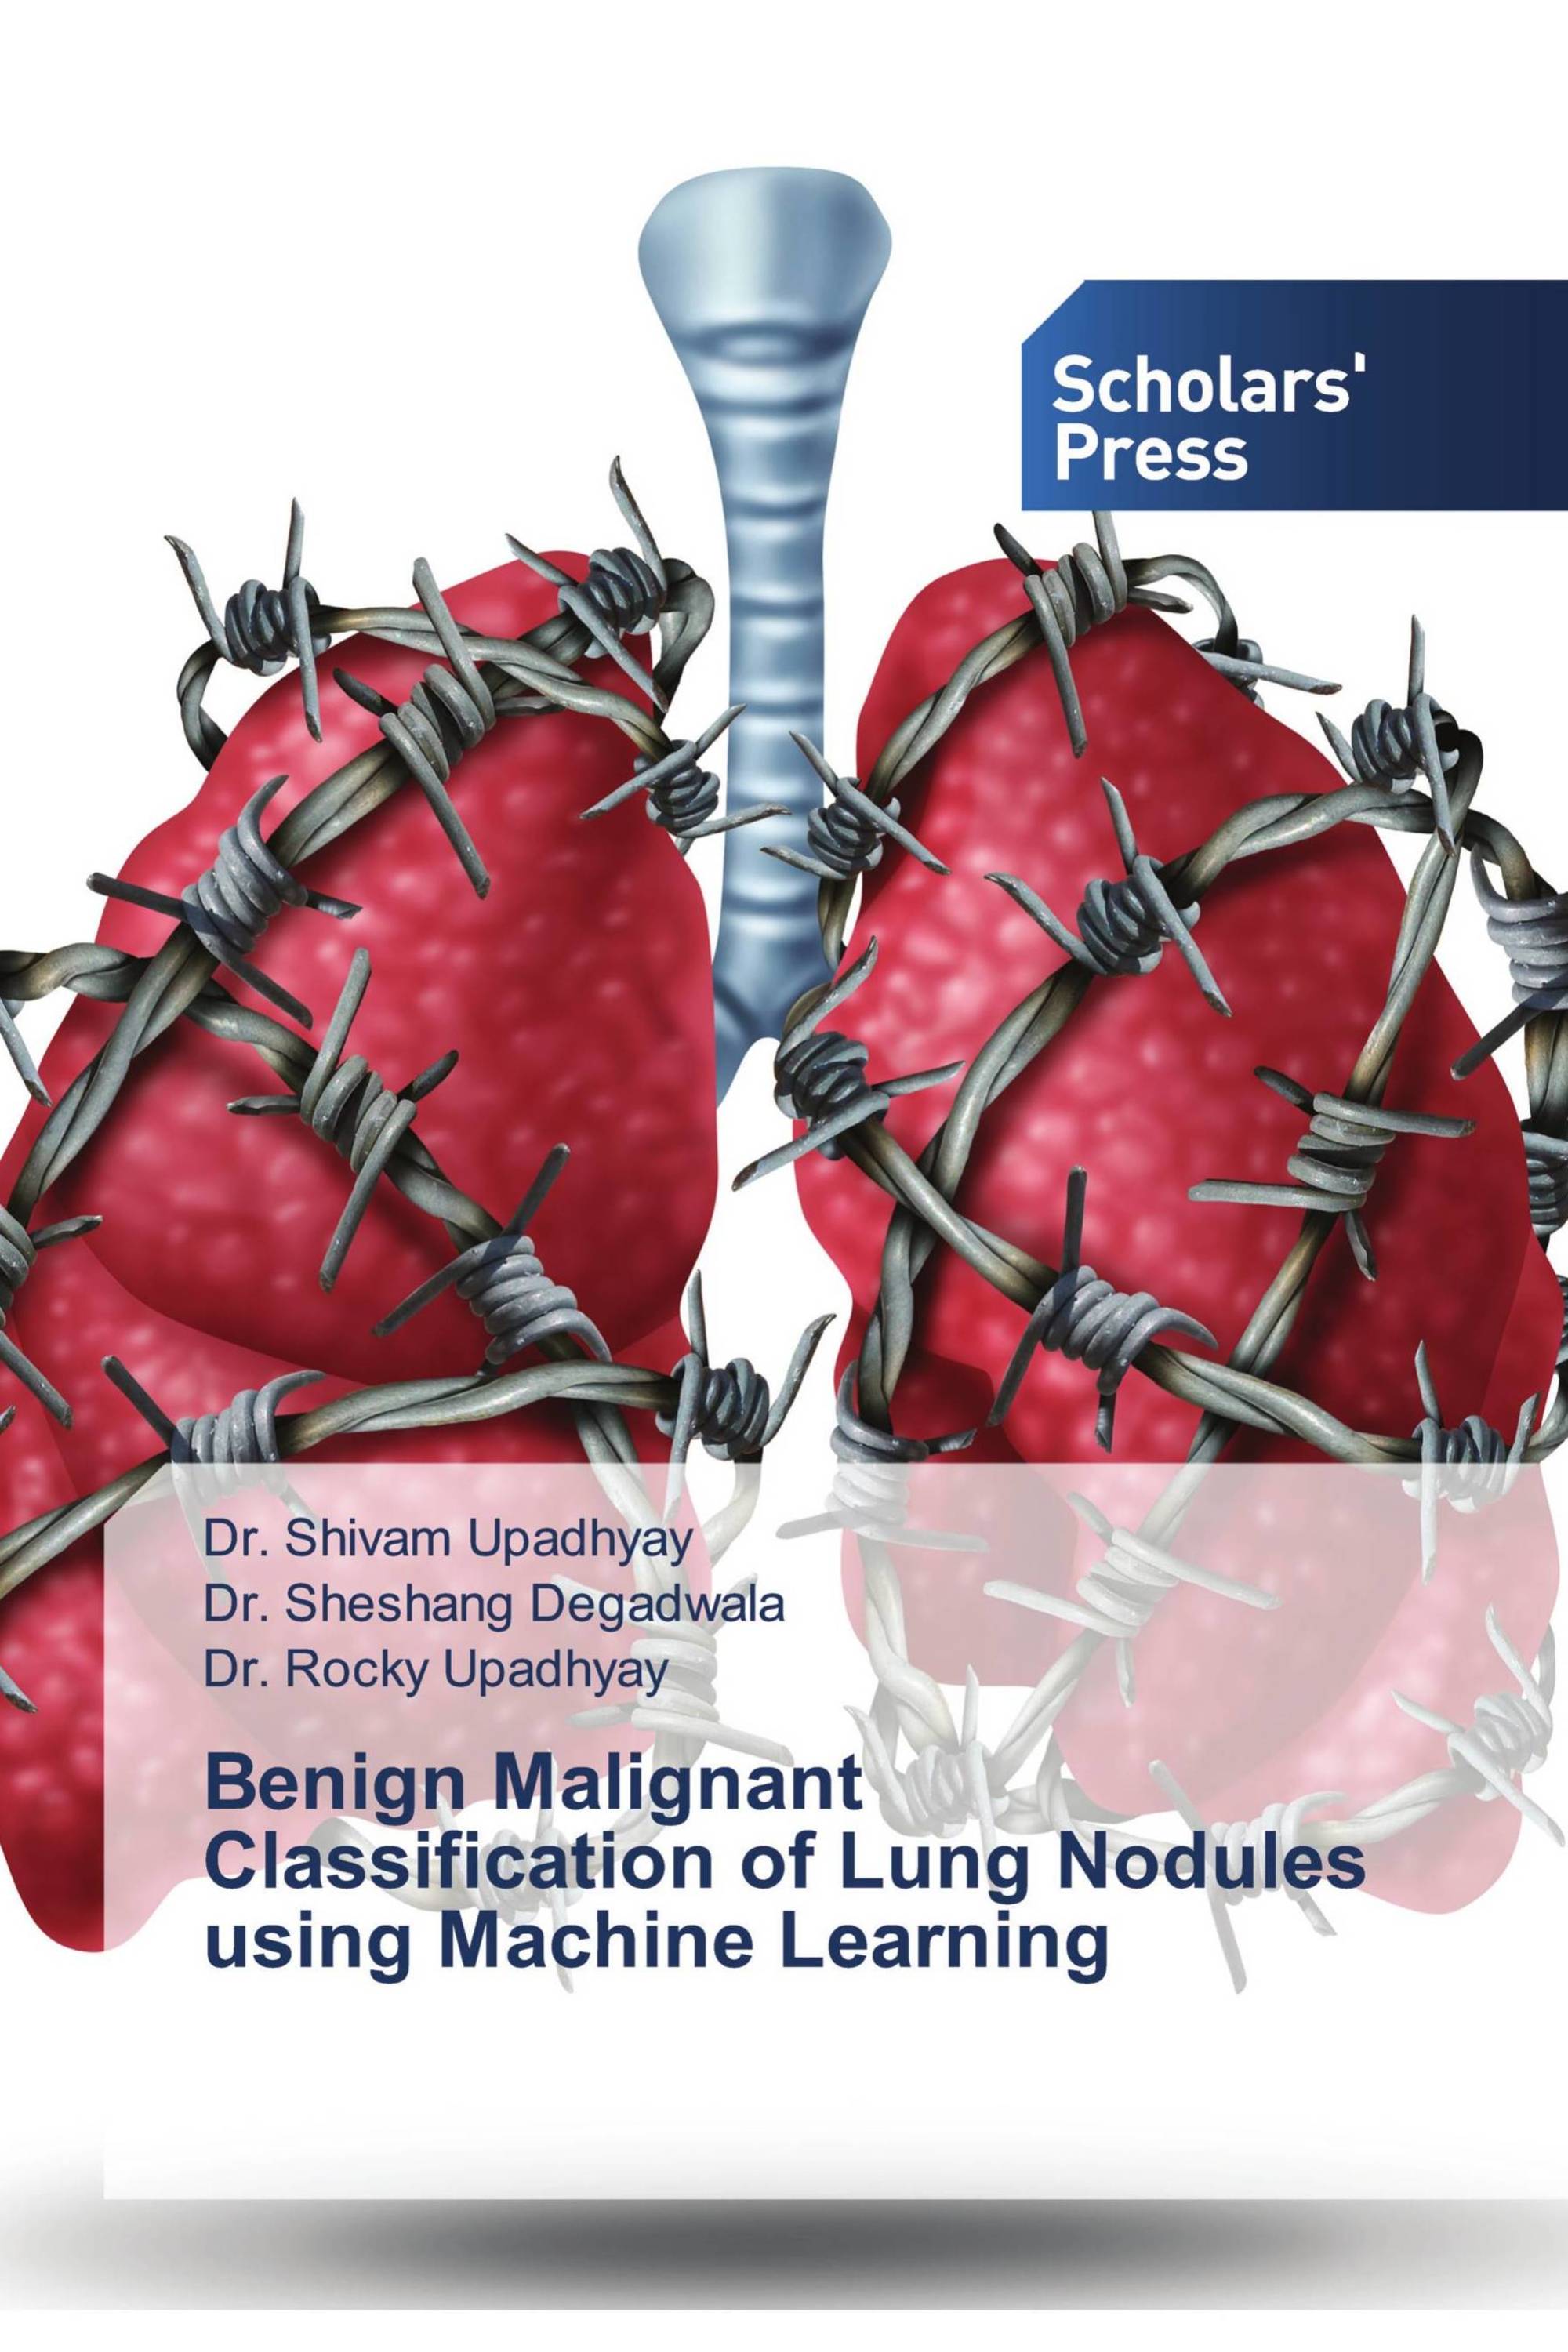 Benign Malignant Classification of Lung Nodules using Machine Learning